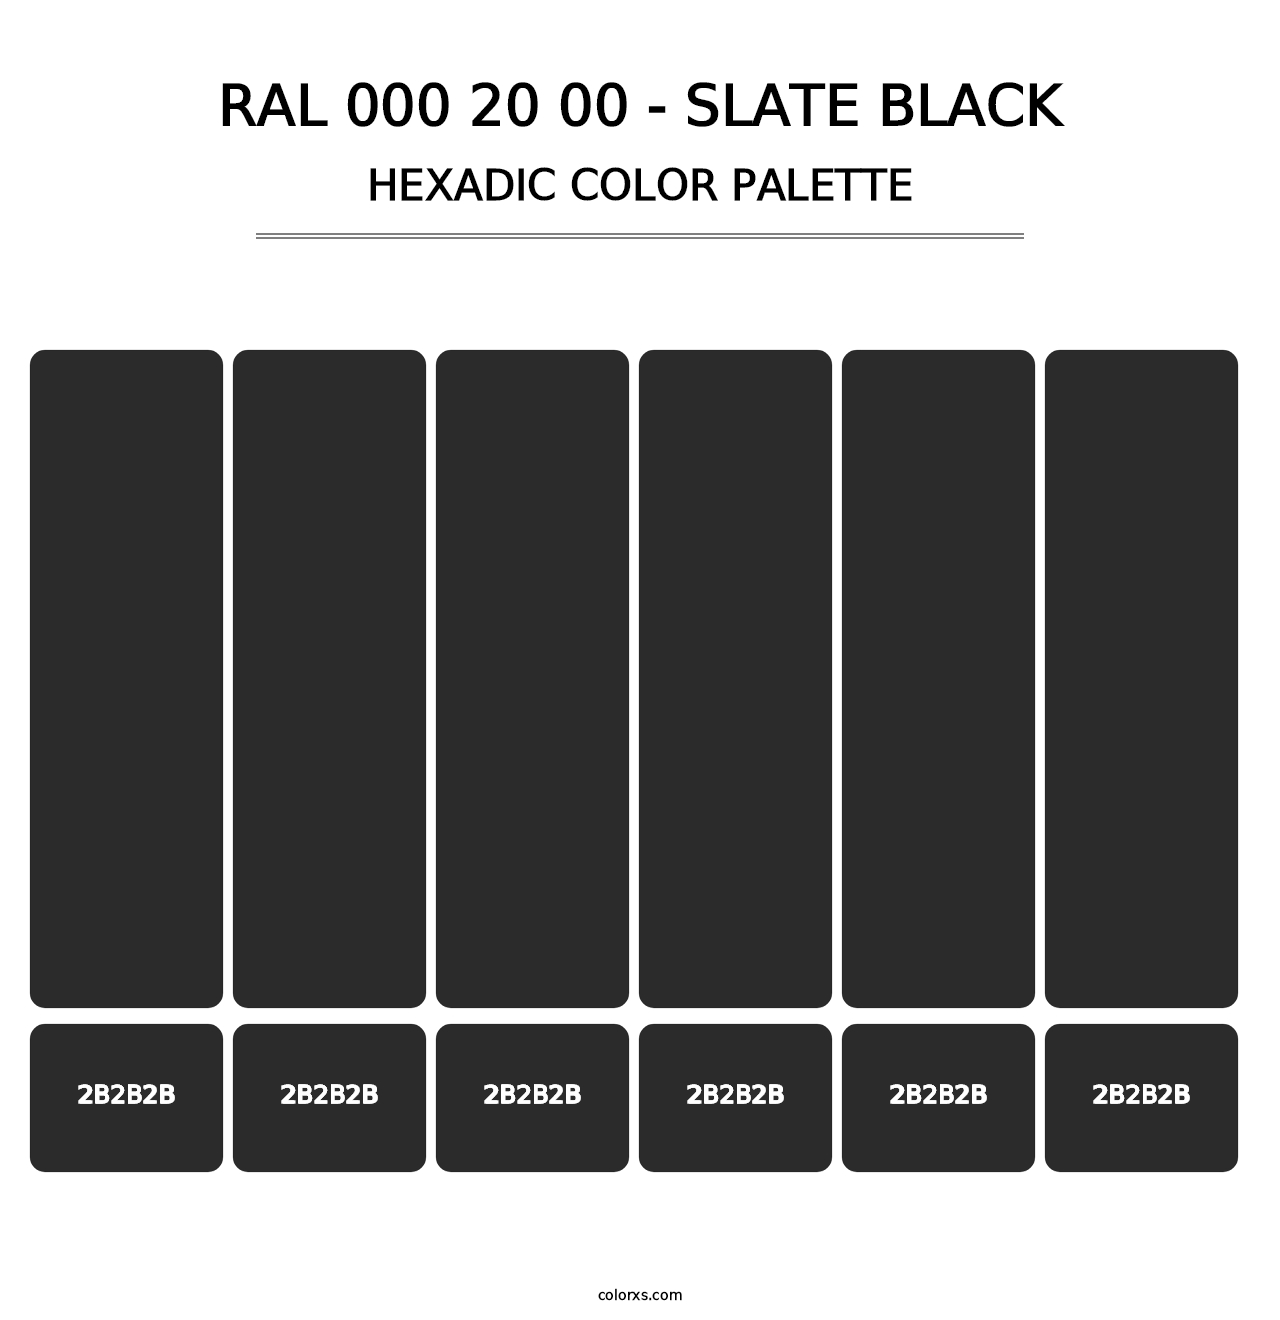 RAL 000 20 00 - Slate Black - Hexadic Color Palette